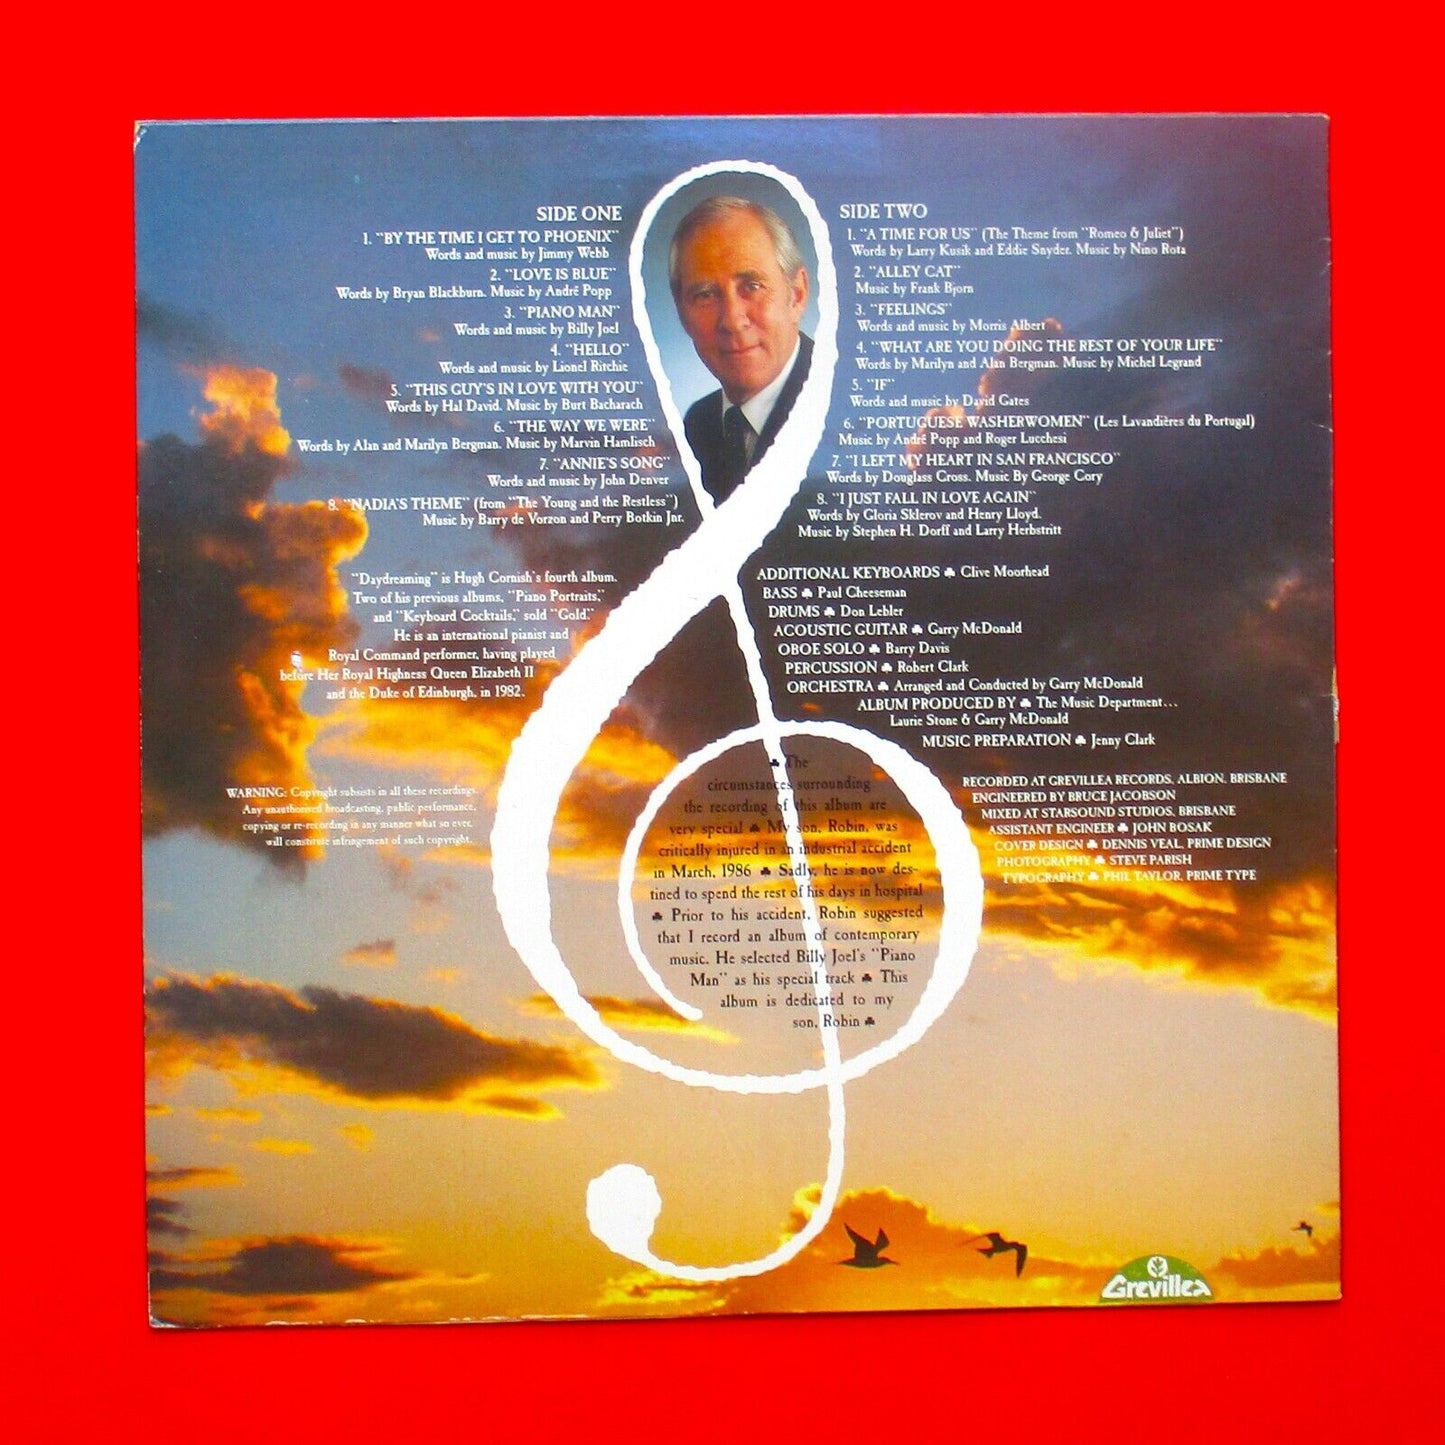 Hugh Cornish ‎Daydreaming Vinyl Album LP 1987 Australian Grevillea Records